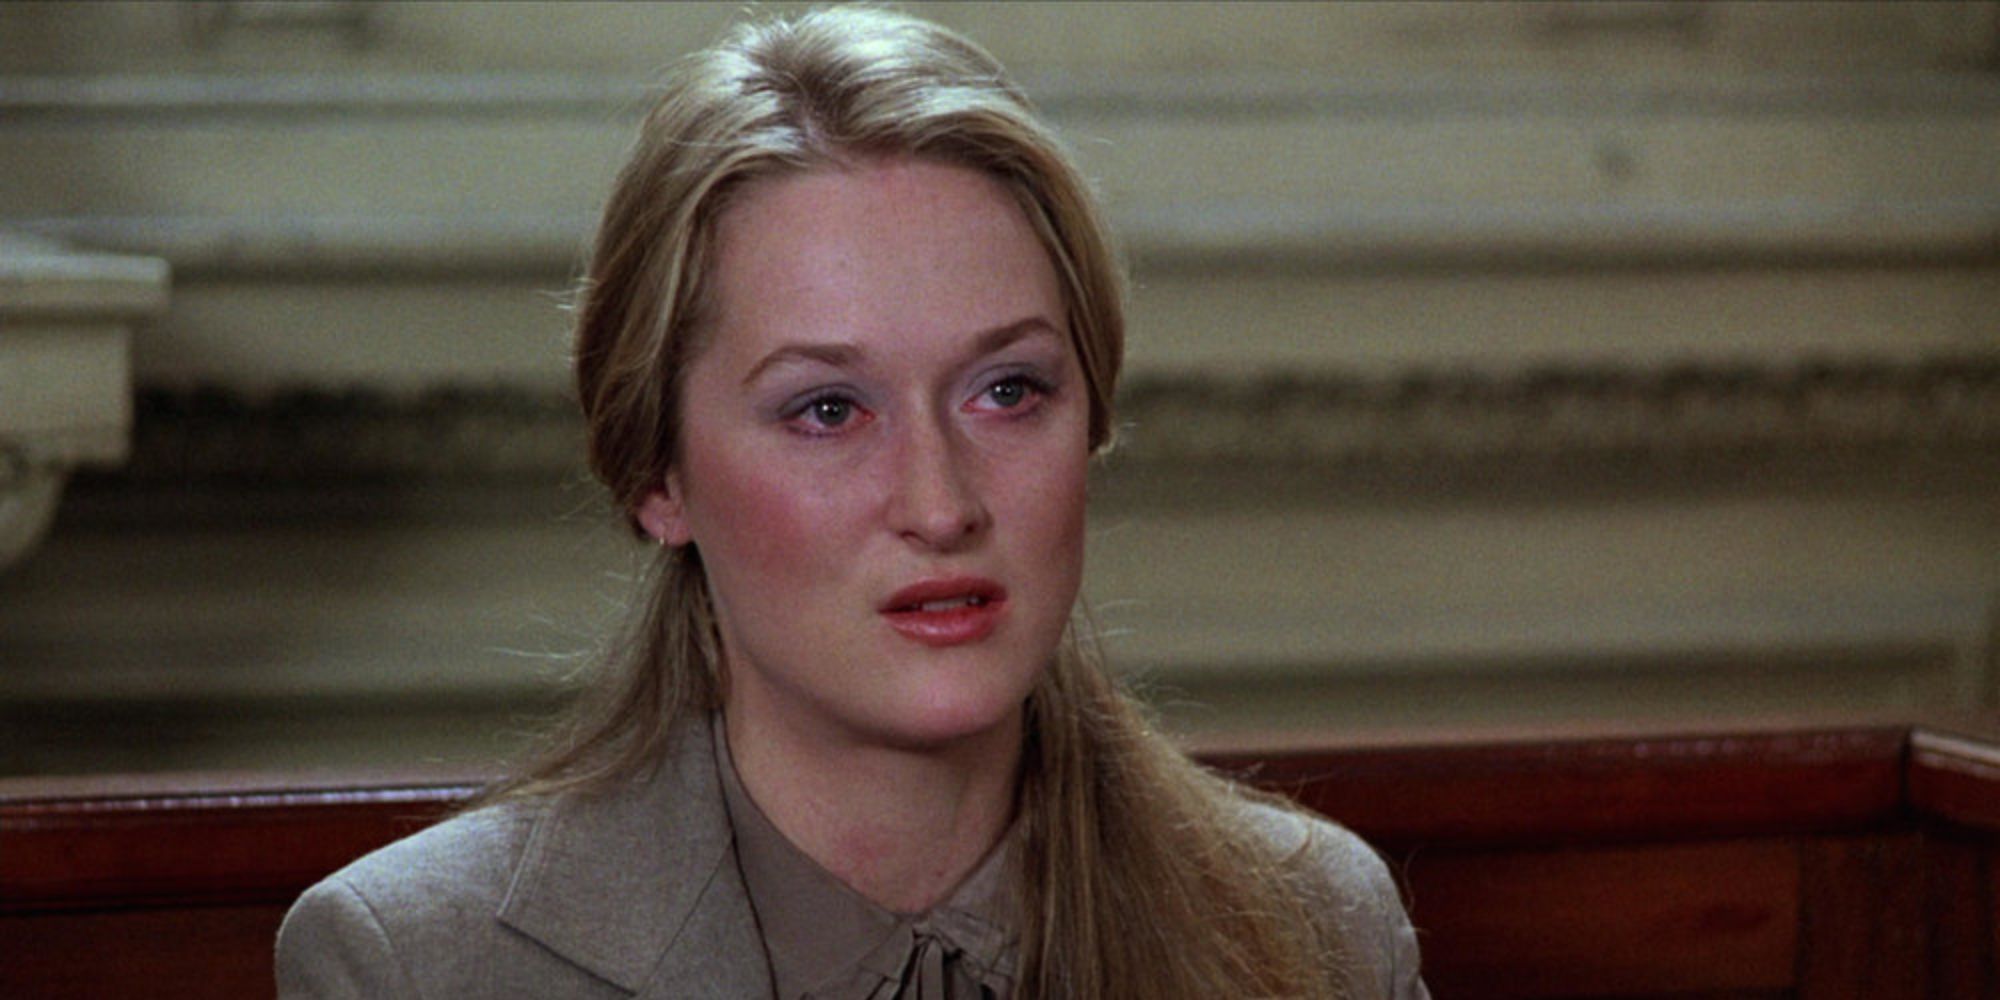 Meryl Streep as Joanna Kramer looking intently while testifying at court in Kramer vs. Kramer.